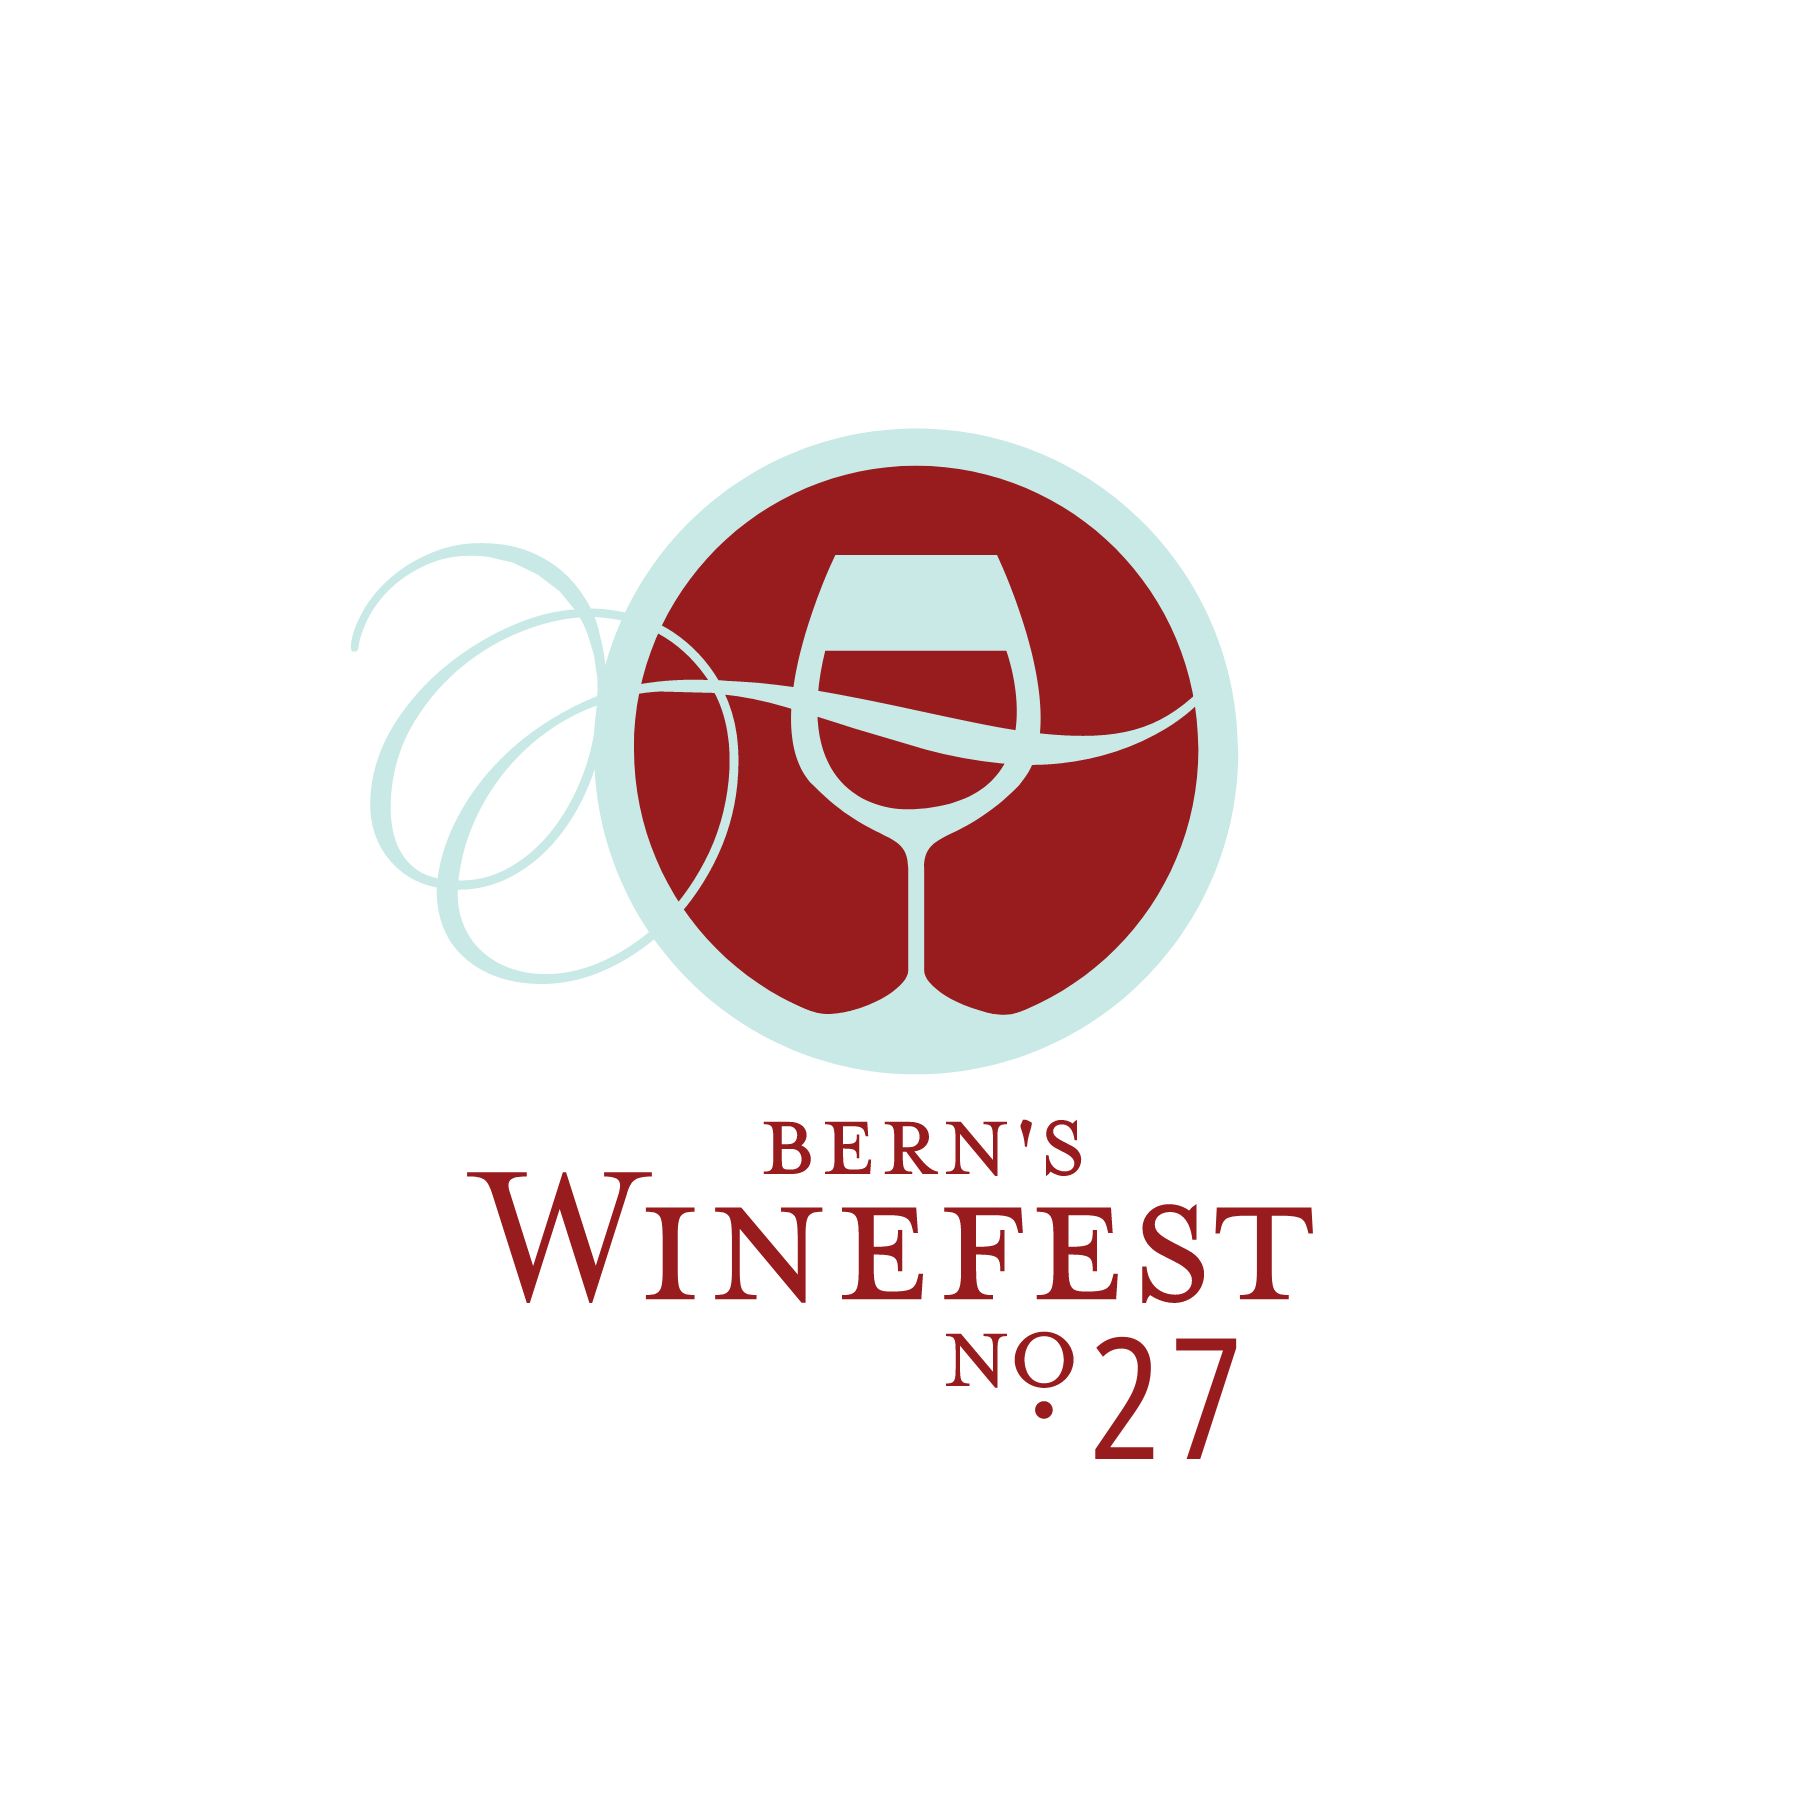 Bern's Winefest No.27